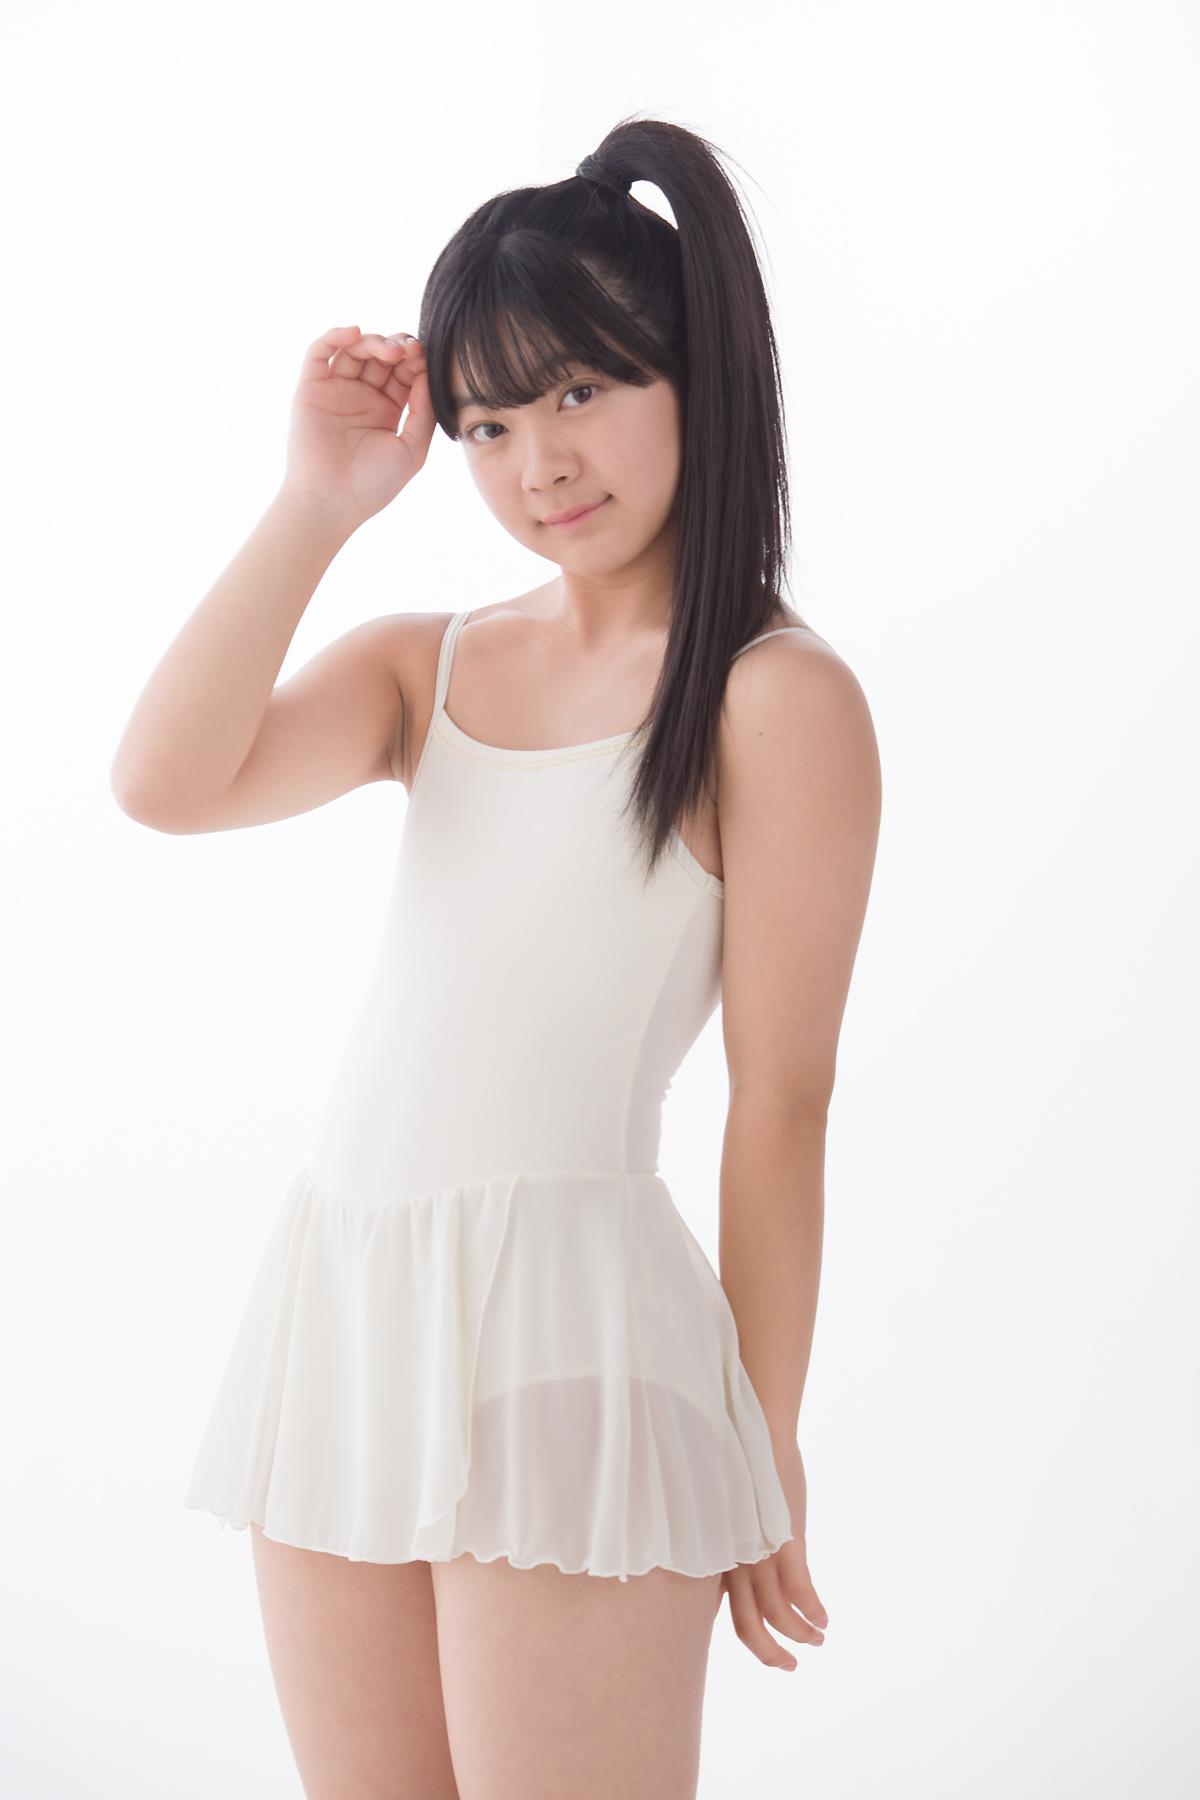 Minisuka.tv Saria Natsume 夏目咲莉愛 - Premium Gallery 2.2 - 24.jpg